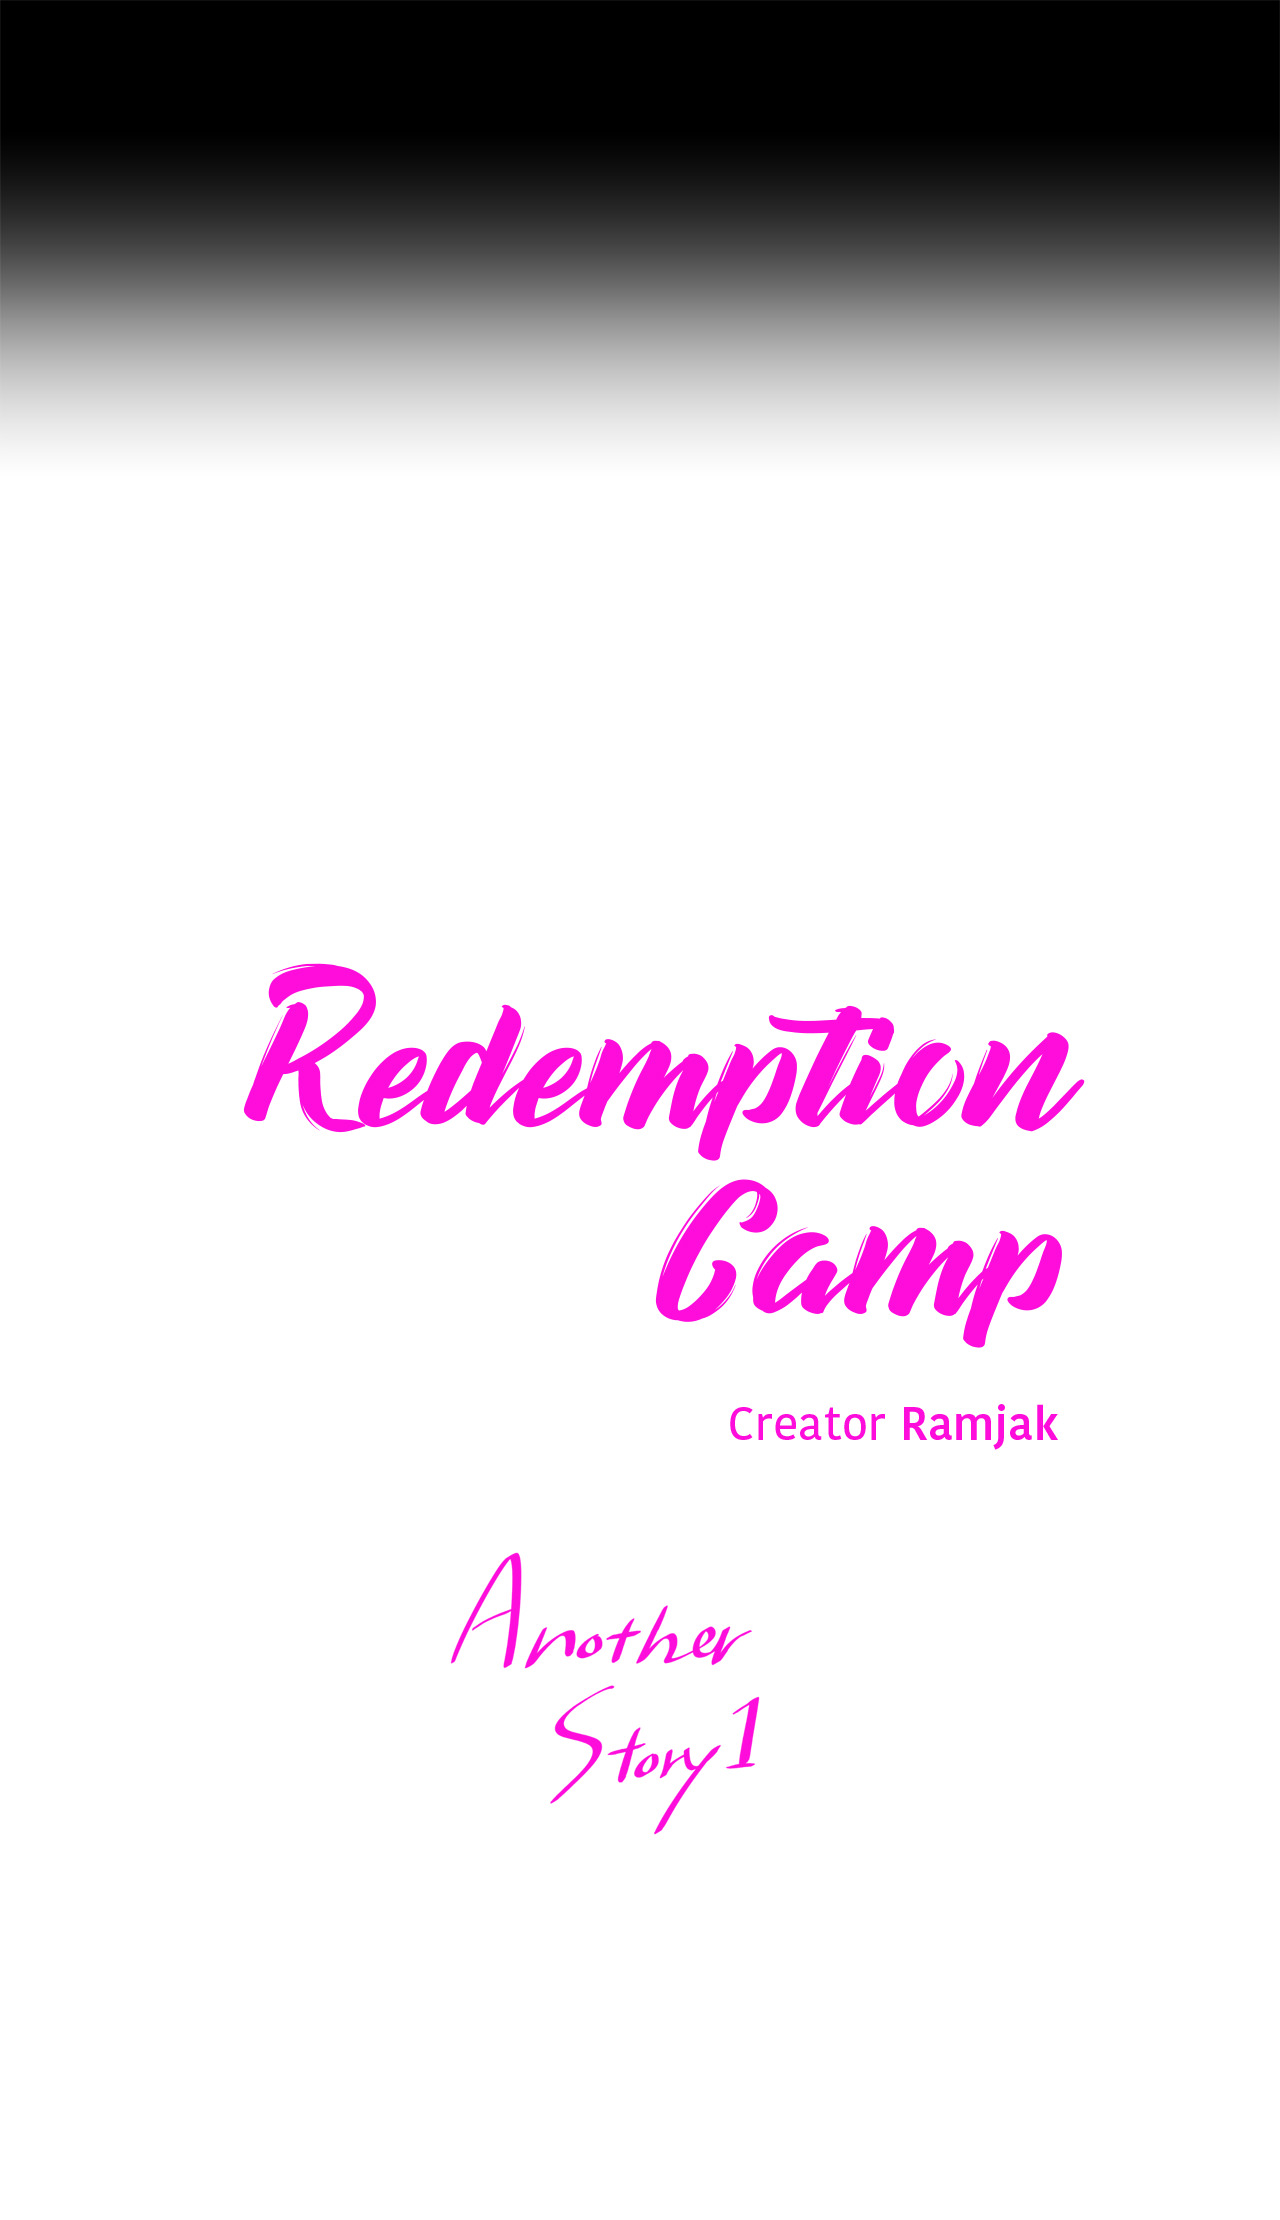 Redemption Camp image